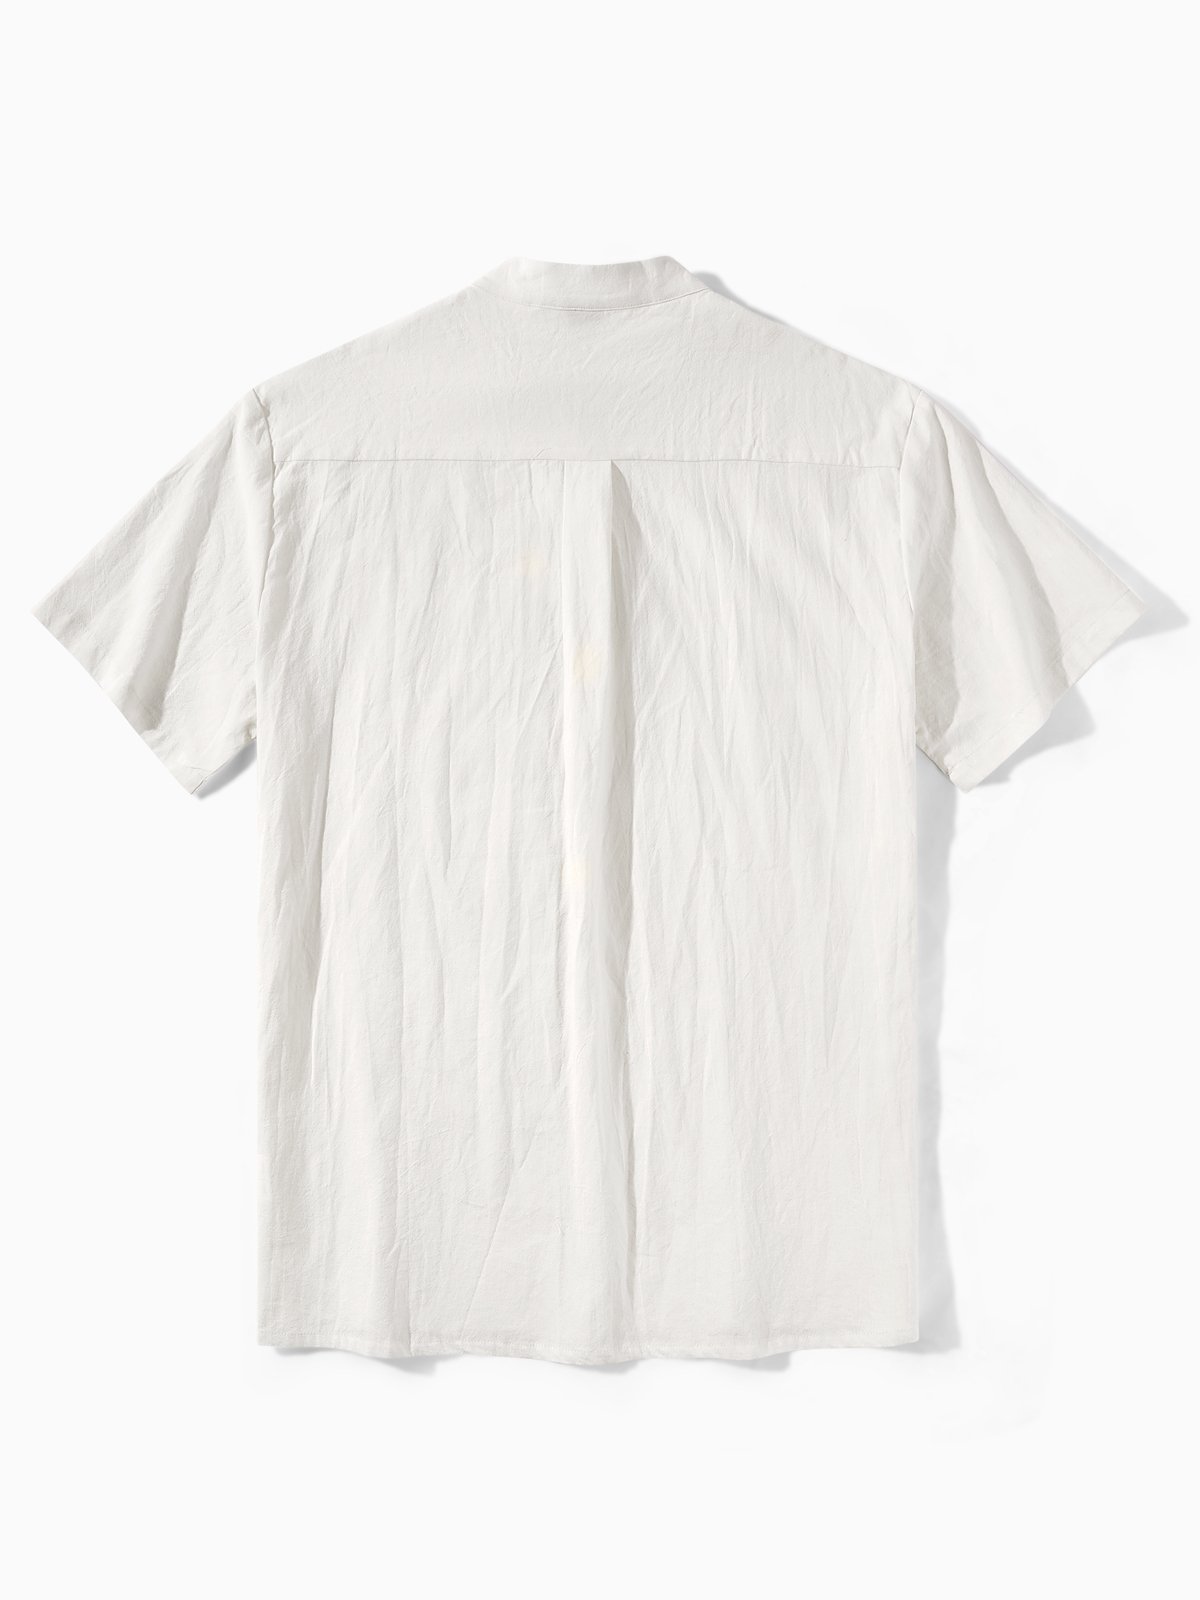 Hardaddy® Cotton Guayabera Stand Collar Shirt